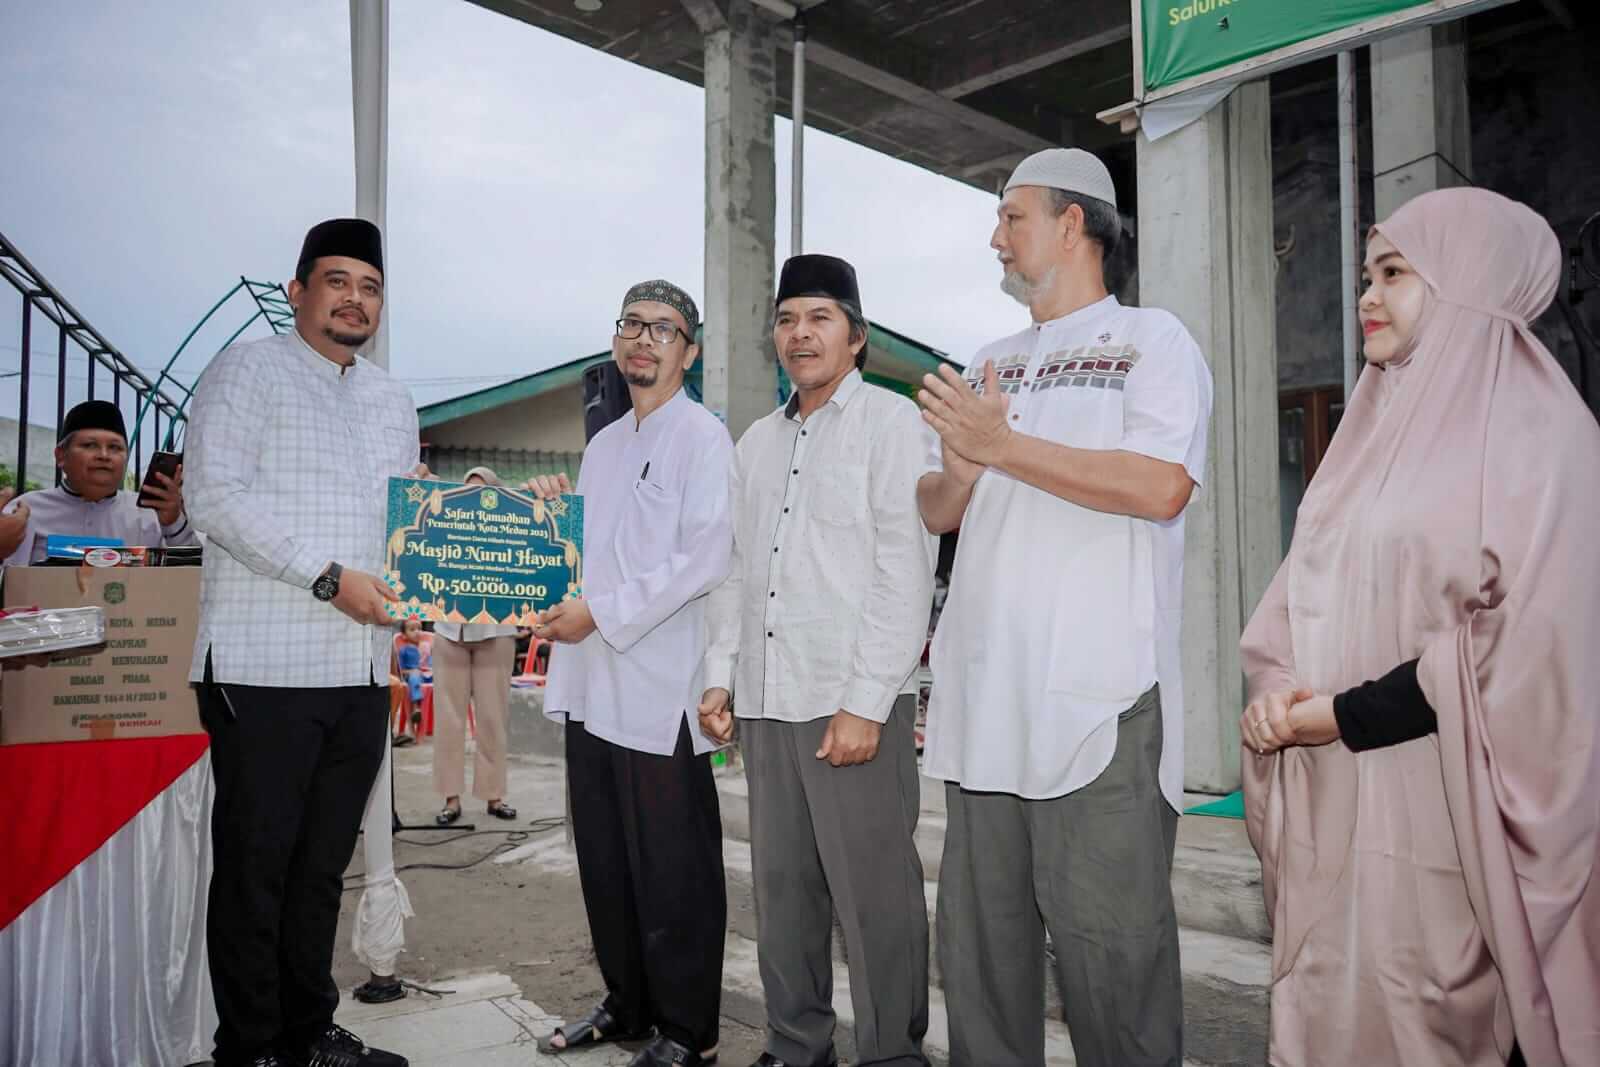 Bantu Legalitas Masjid Melalui Program Masjid Mandiri